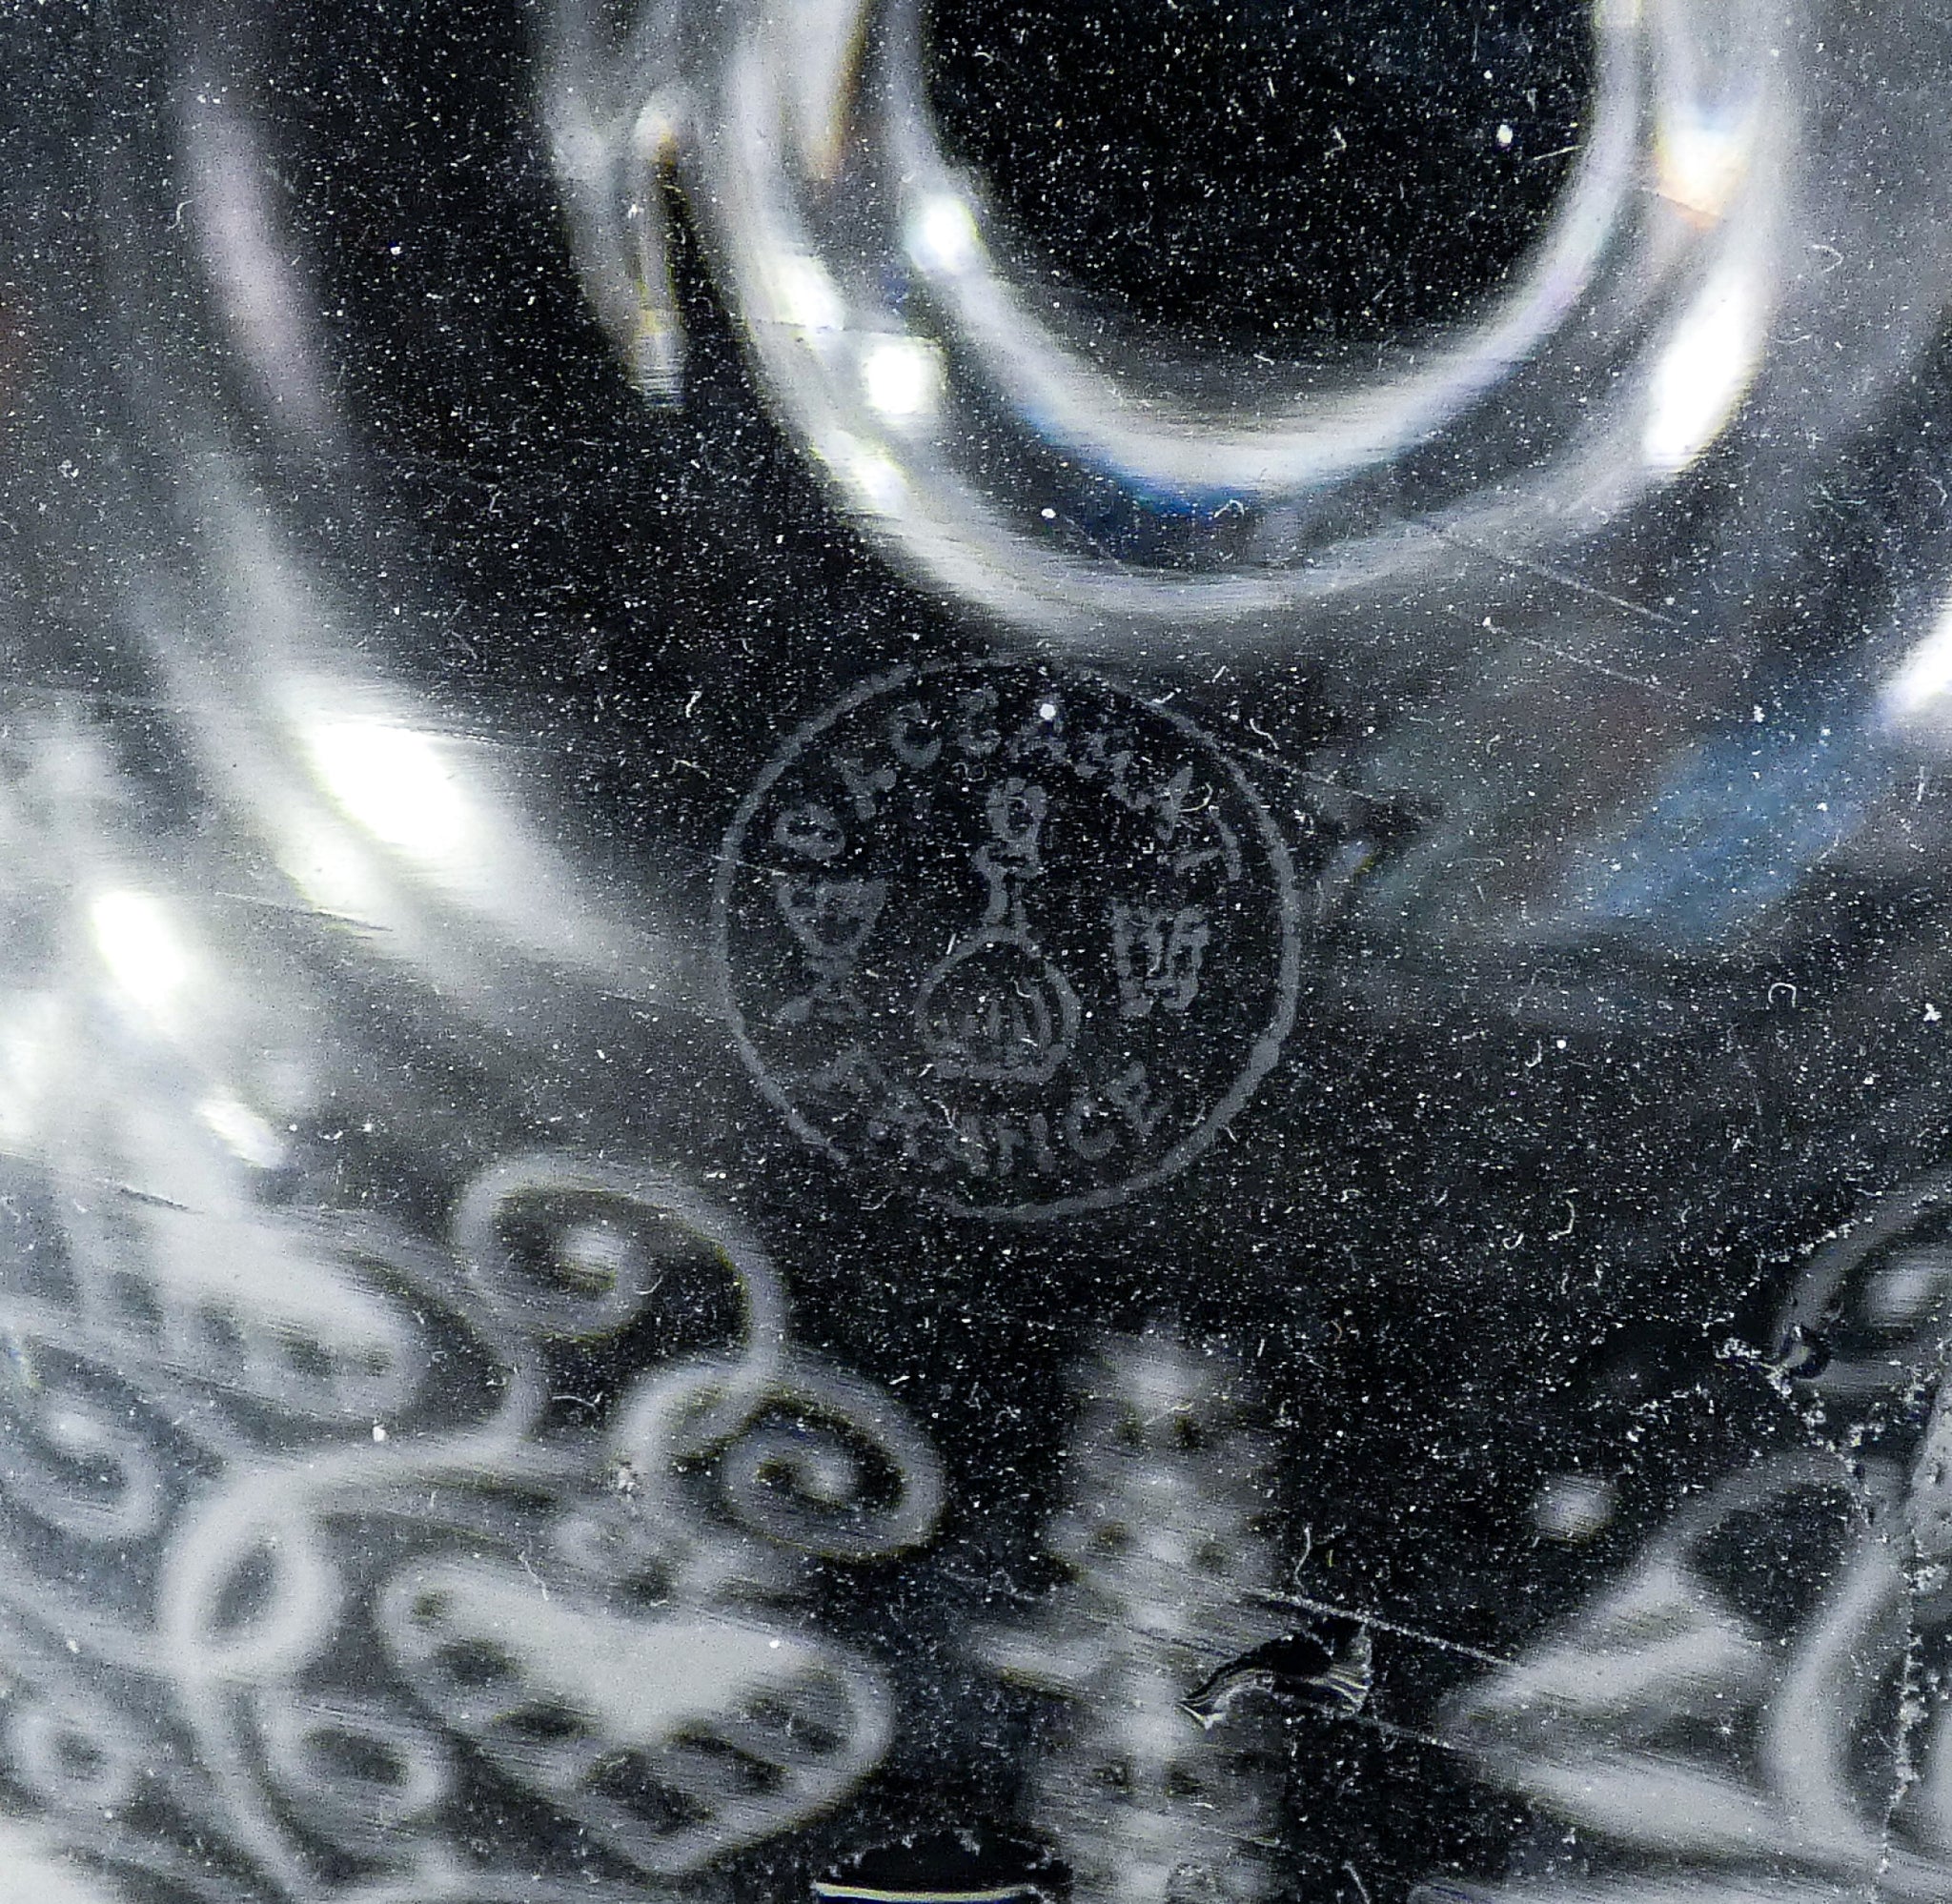 coppia bottiglie baccarat motivo argentina decanter  cristallo epoca 1940s